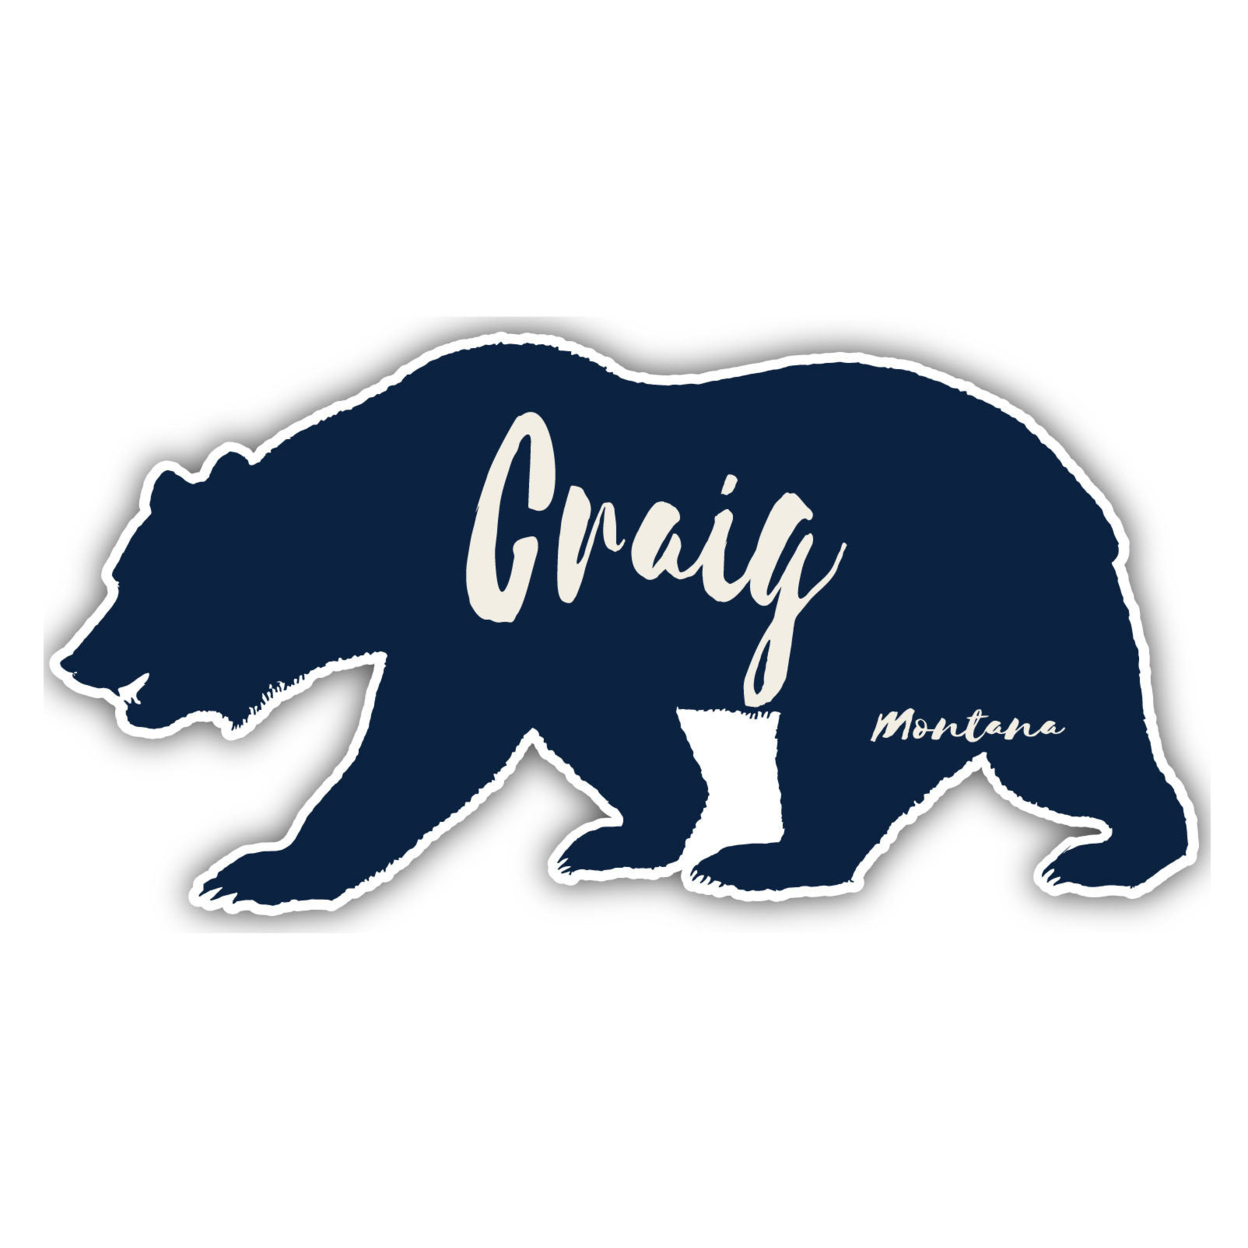 Craig Montana Souvenir Decorative Stickers (Choose Theme And Size) - 4-Pack, 2-Inch, Bear